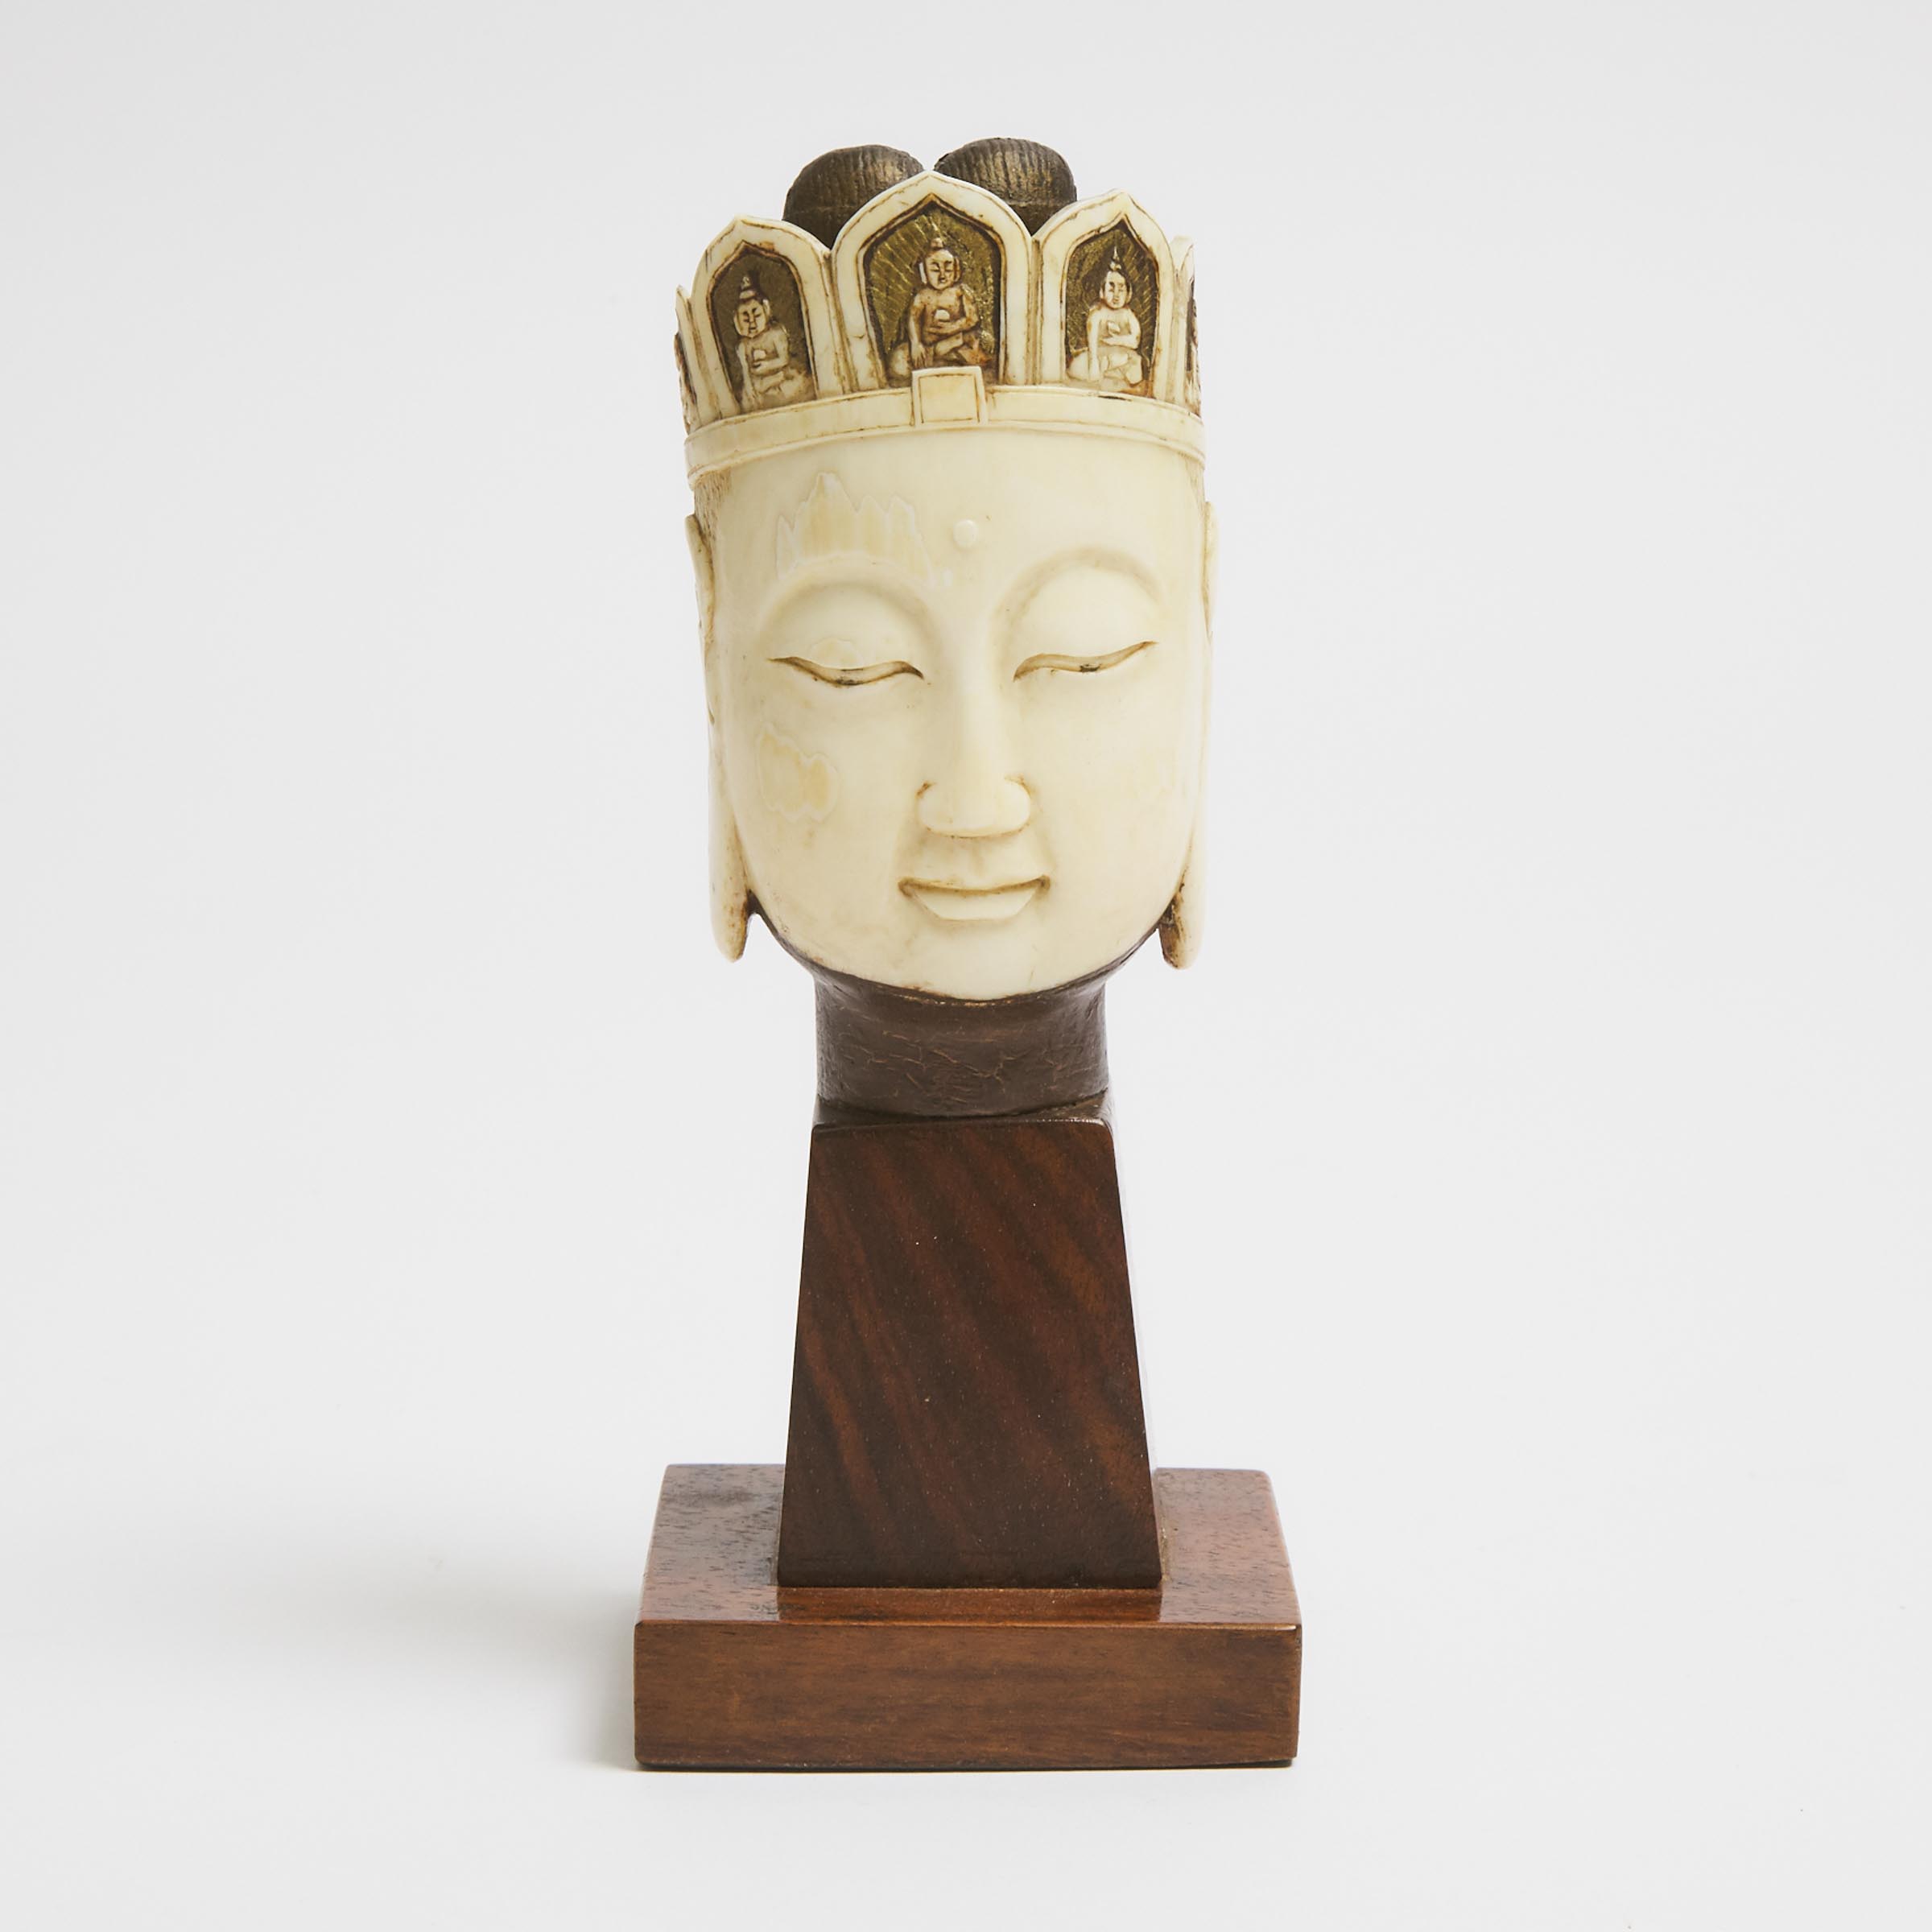 An Ivory and Wood Carved Head of Vairocana Buddha, 19th Century